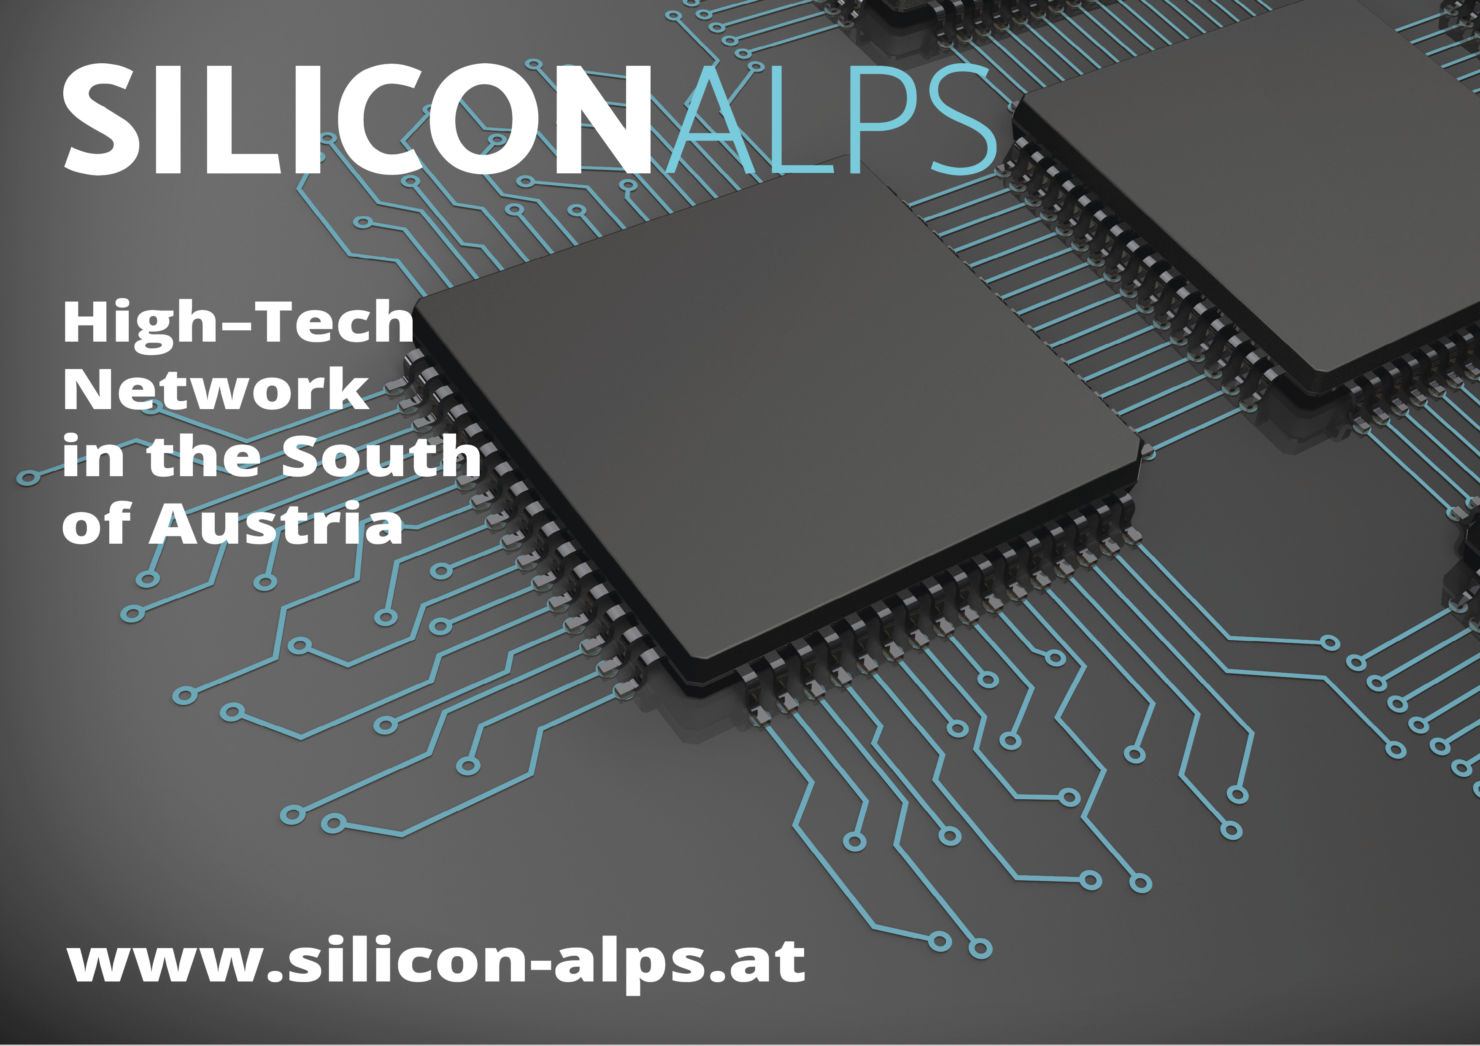 Mehr Infos unter silicon-alps.at